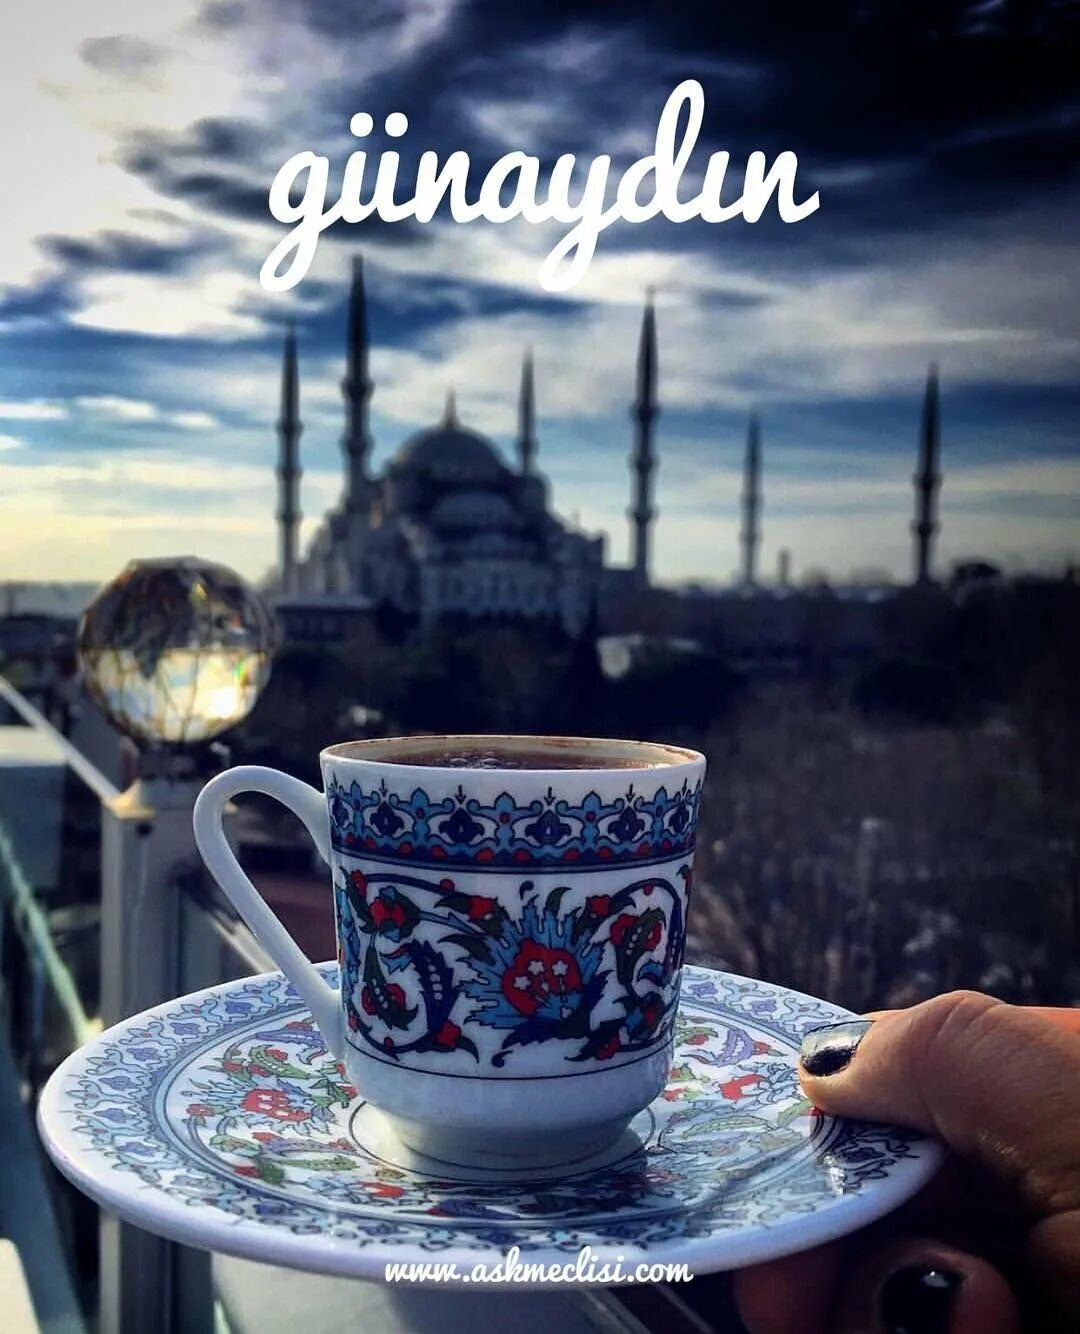 Доброе утро картинки на турецком языке мужчине. Стамбул Гюнайдын. Доброе утро на турецком. Открытки с добрым утром на турецком. Пожелания с добрым утром по турецки.